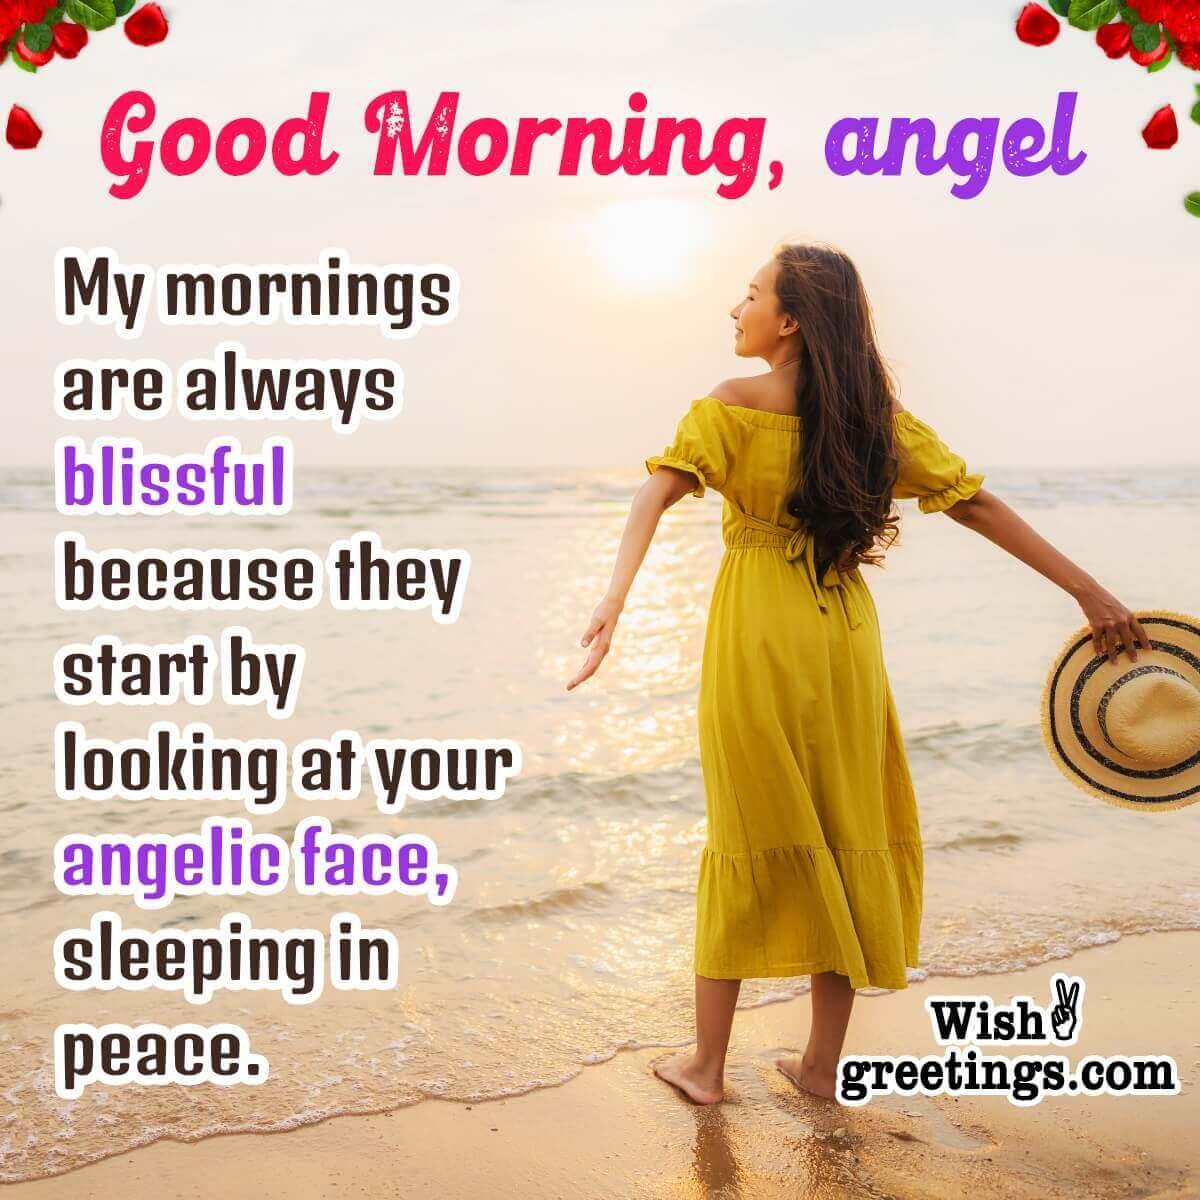 Good Morning Angel, Wish Photo